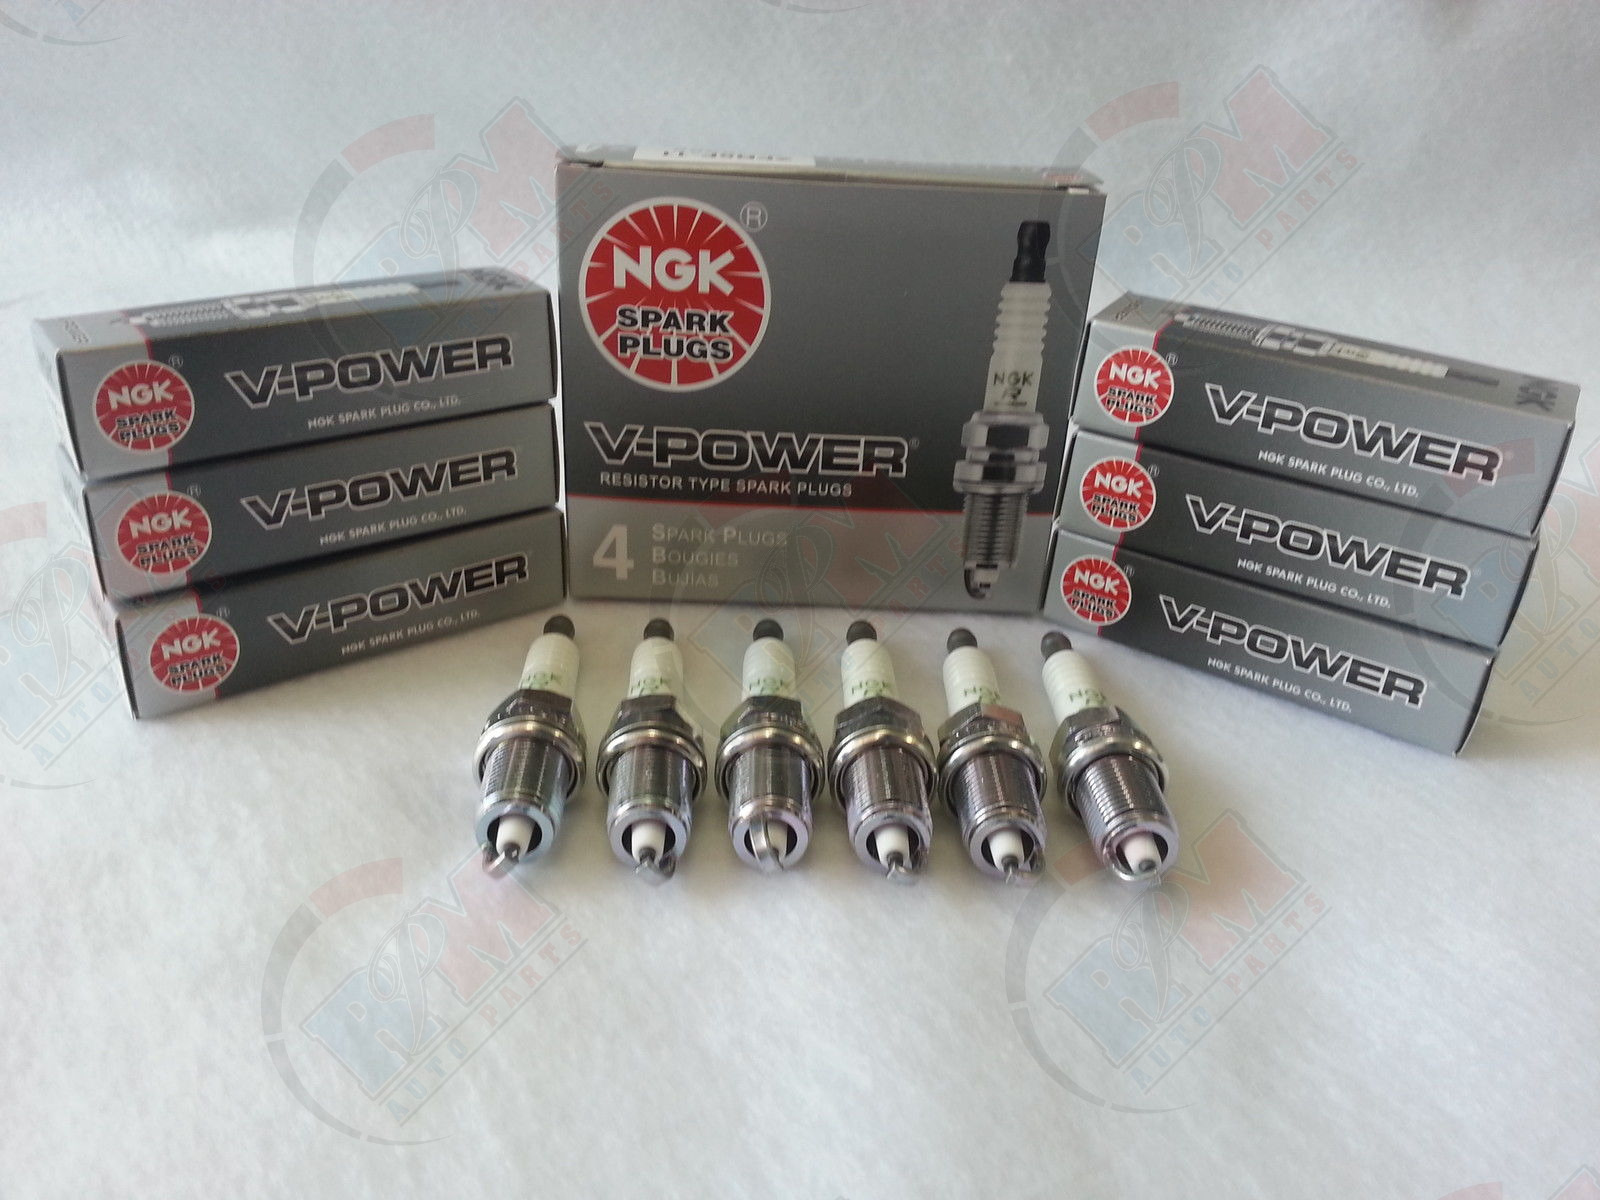 6-New NGK V-Power Copper Spark Plugs BCPR5E11 #1273 Made in Japan 